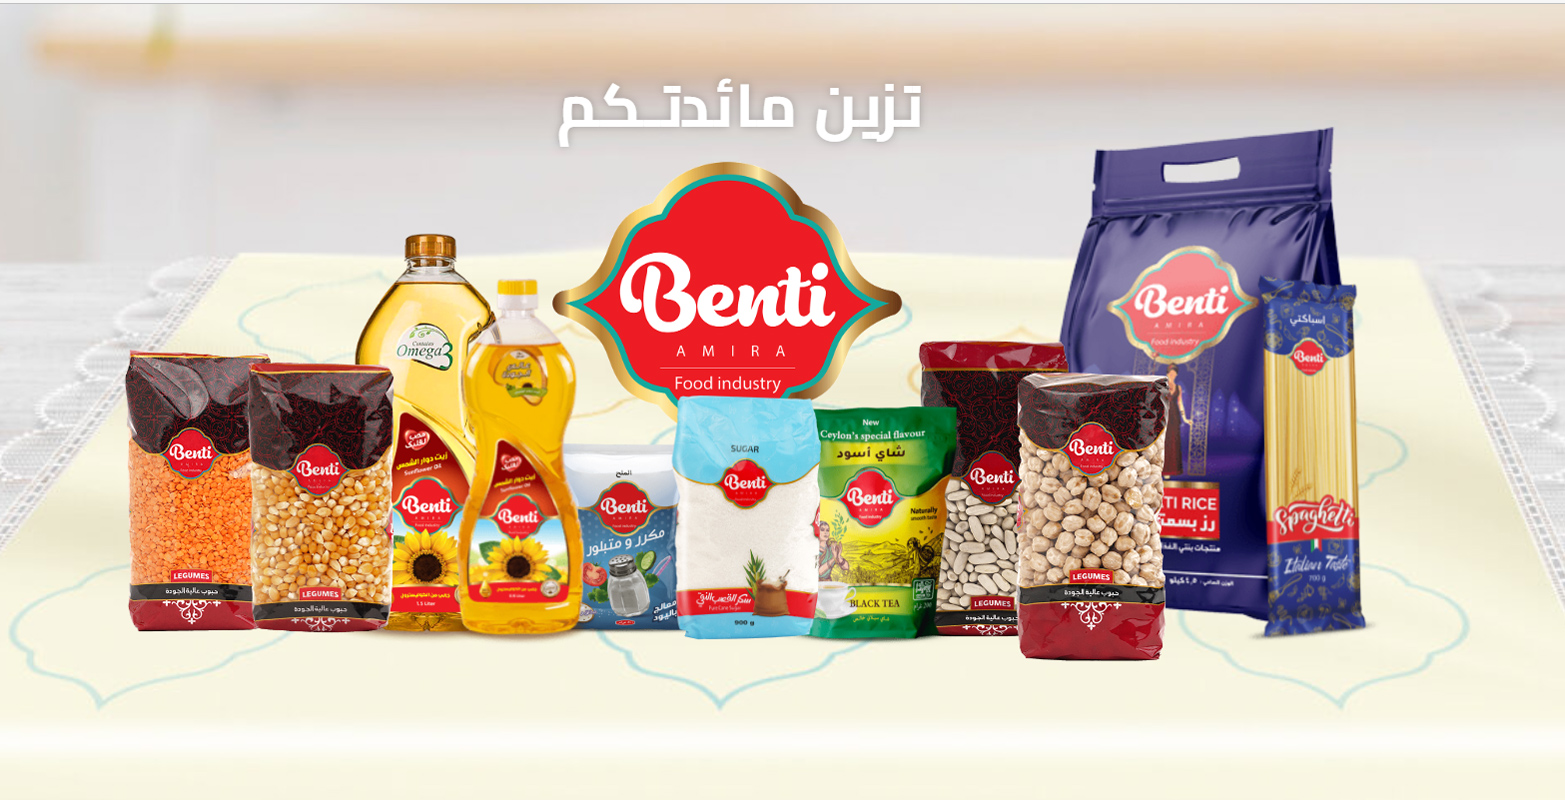 Maya Group announces launch of Benti